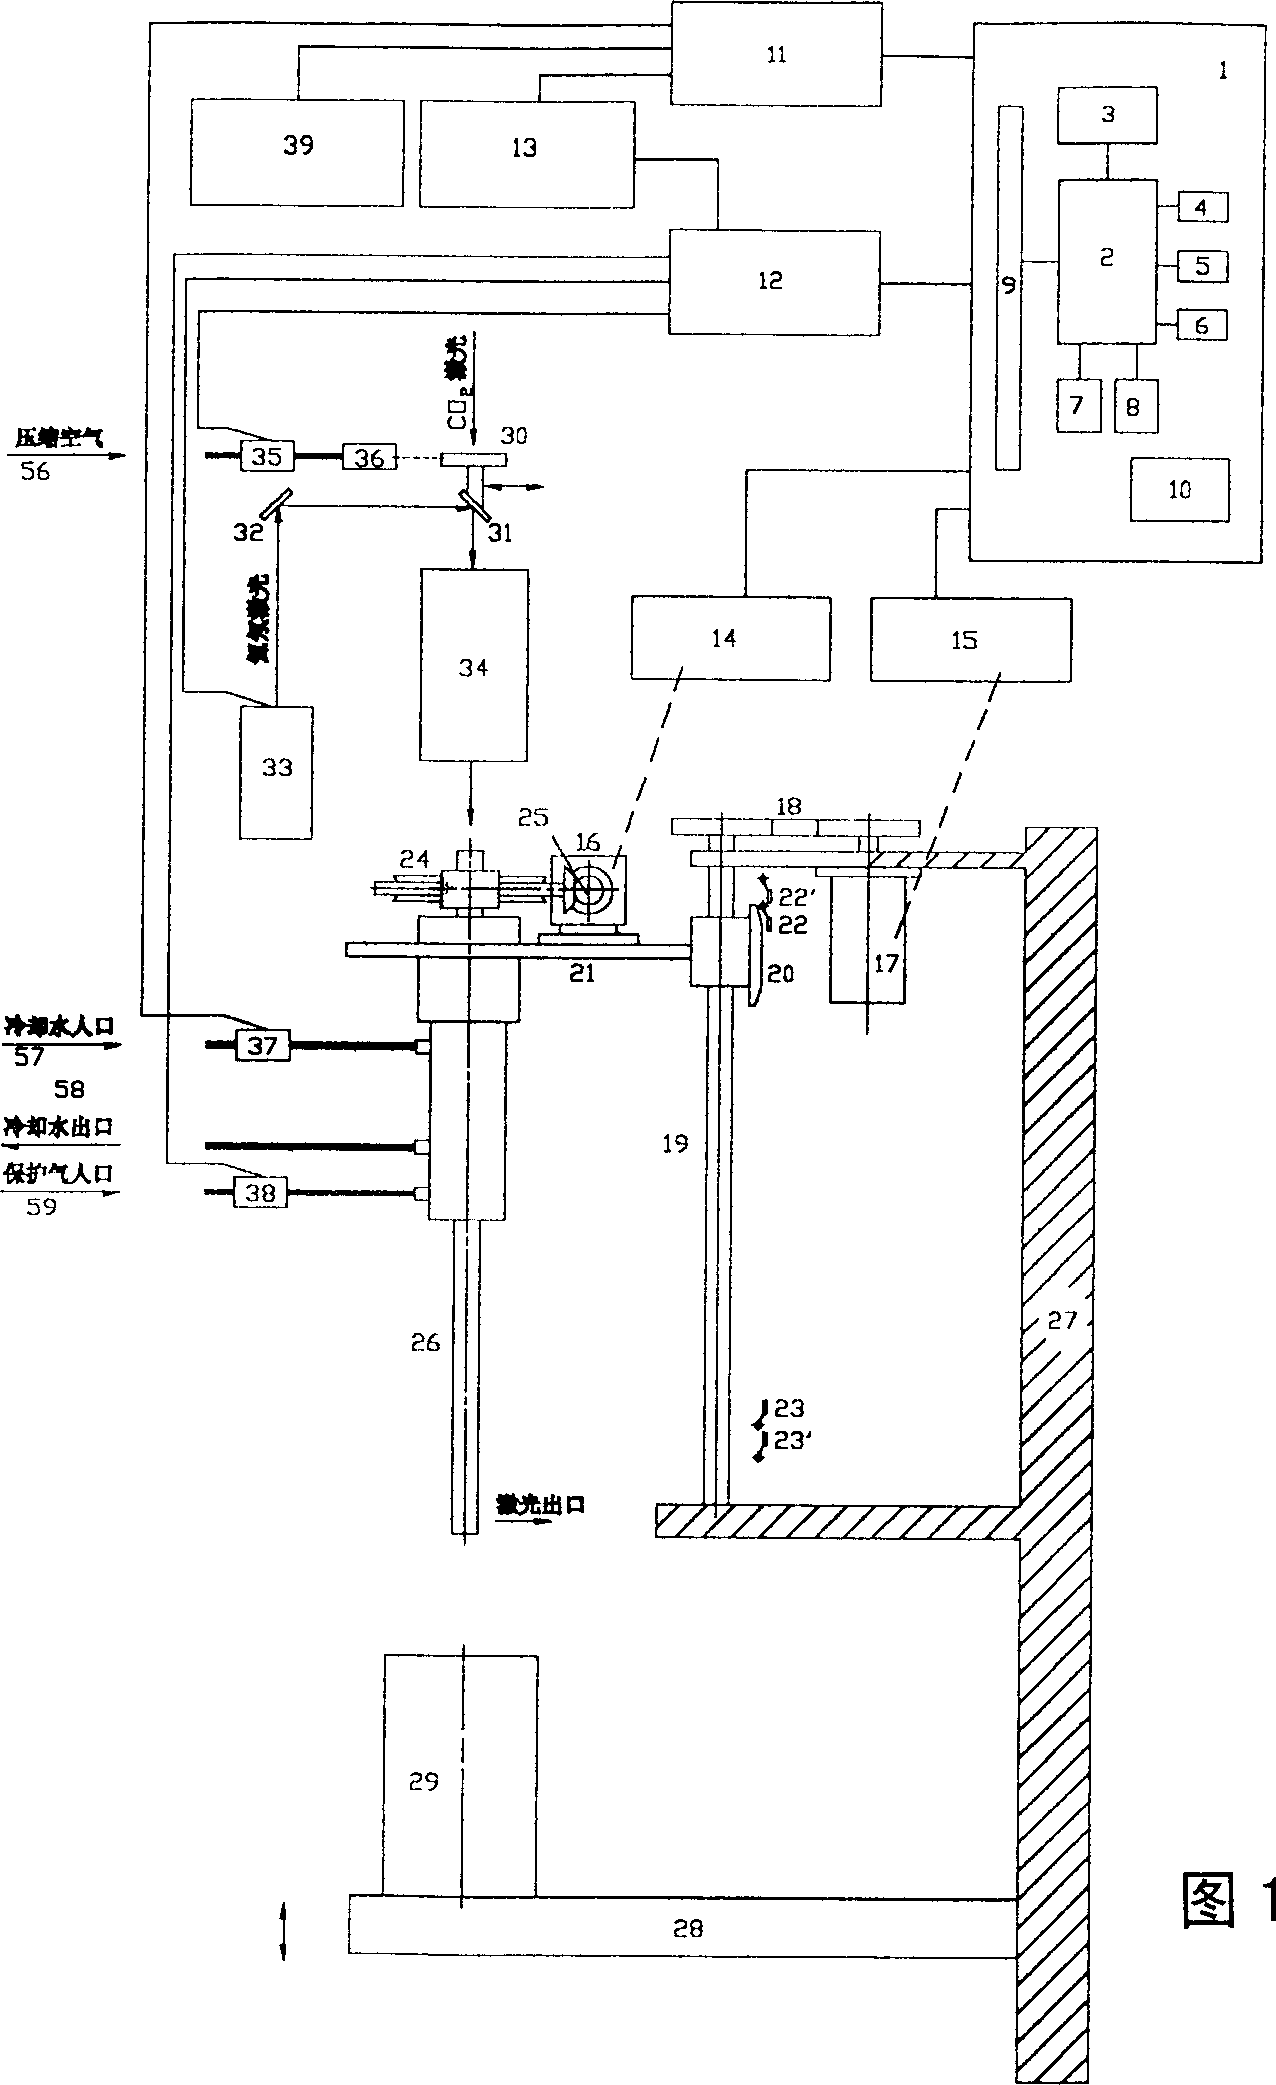 Computerized digital control system of laser metal surface enhanced processor